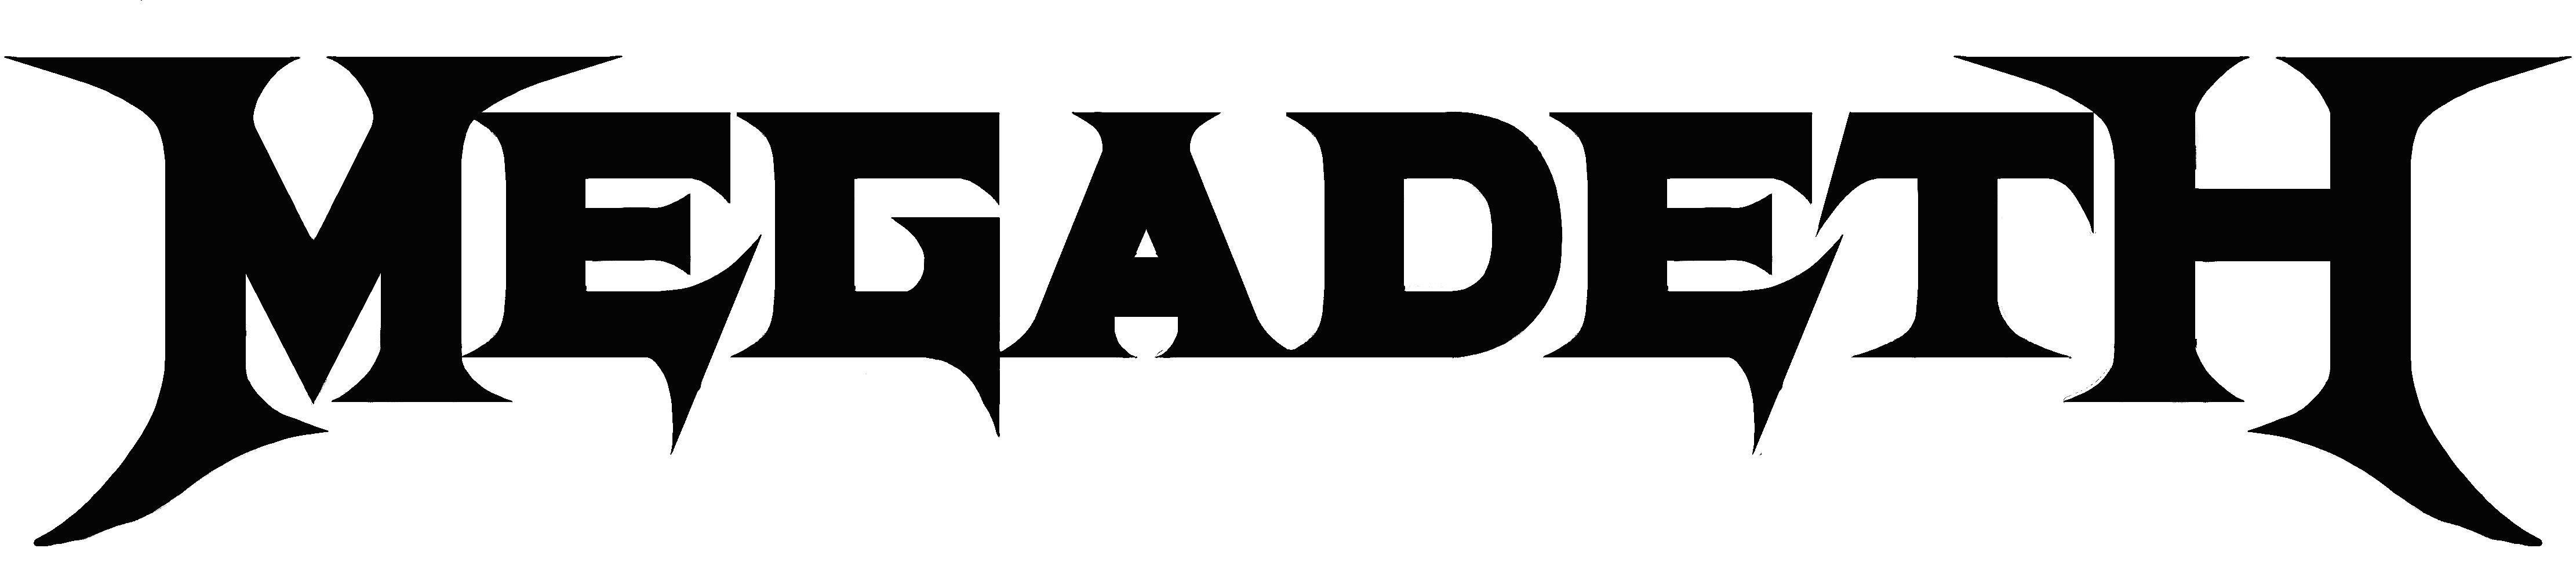 Megadeth Logo - Megadeth #band #logo. Band Logos. Band logos, Megadeth, Logos